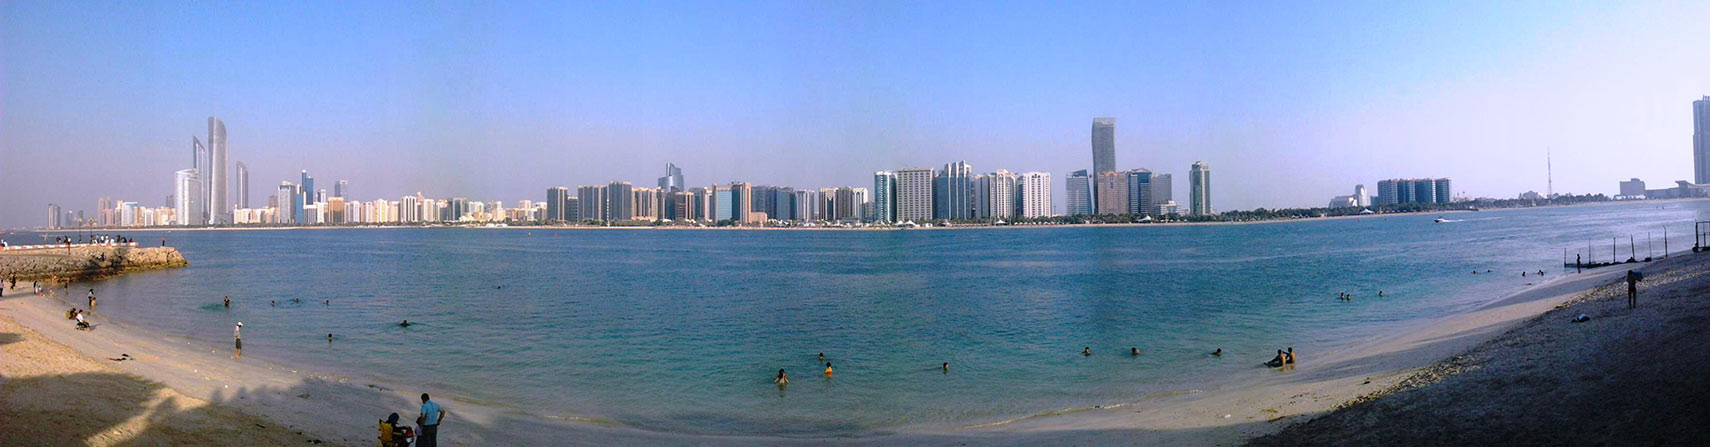 Panoramic view of the Corniche in Abu Dhabi, United Arab Emirates